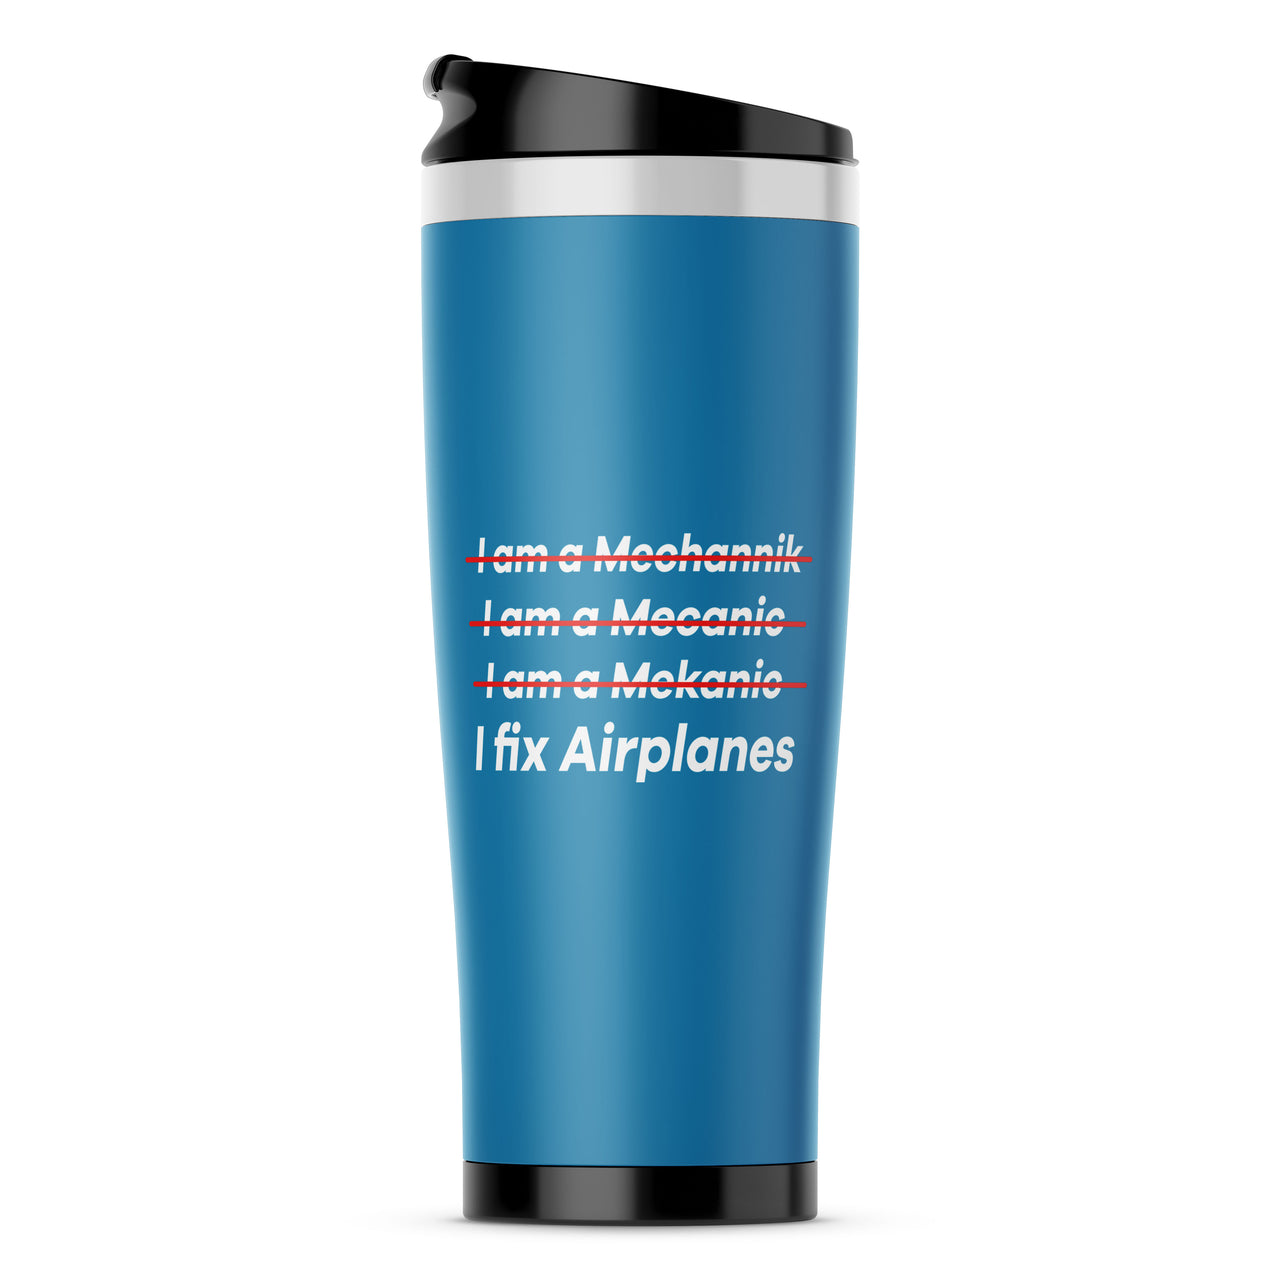 I Fix Airplanes Designed Travel Mugs